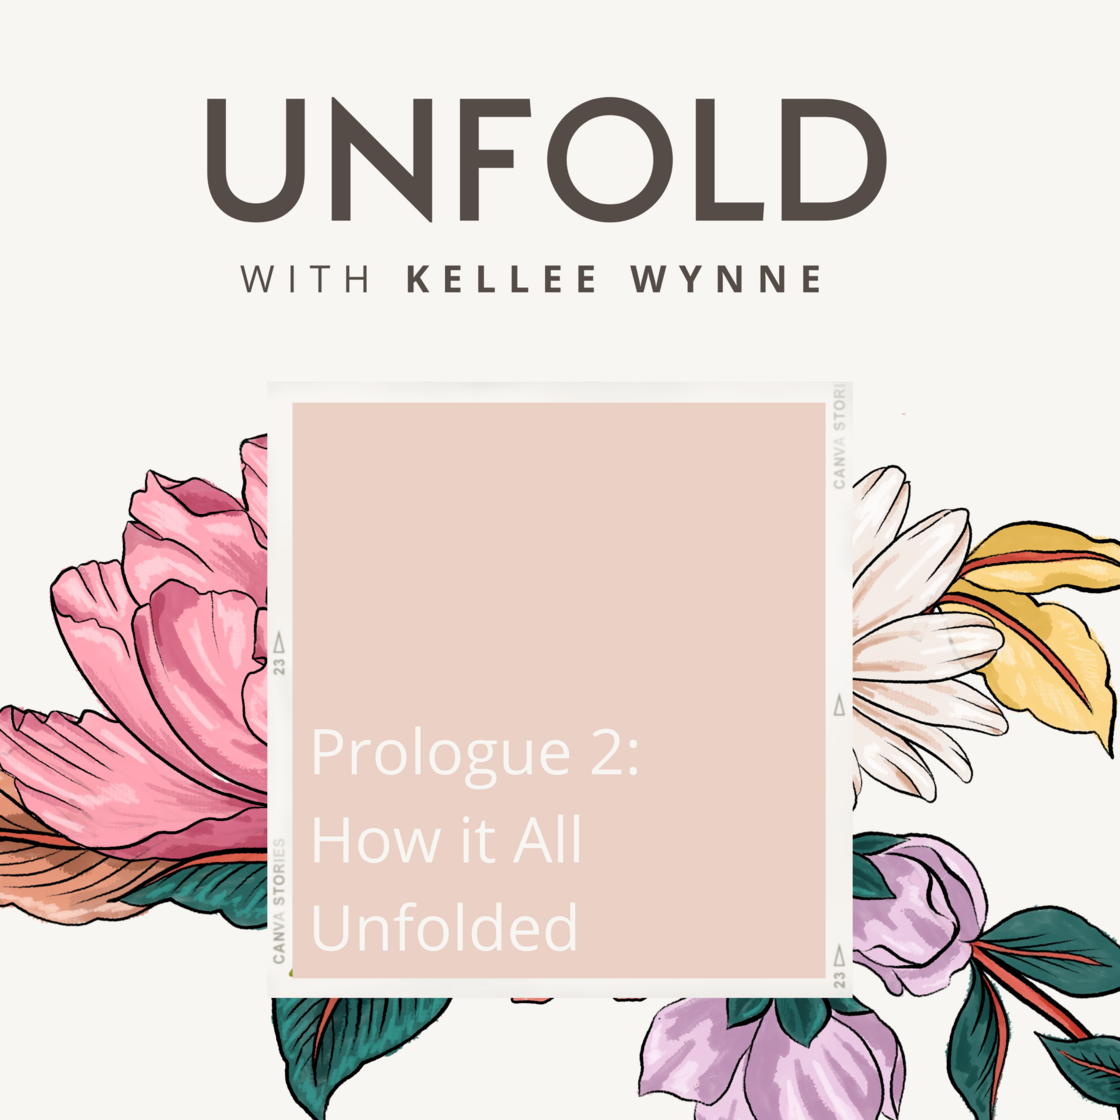 UNFOLD with Kellee Wynne prologue 2